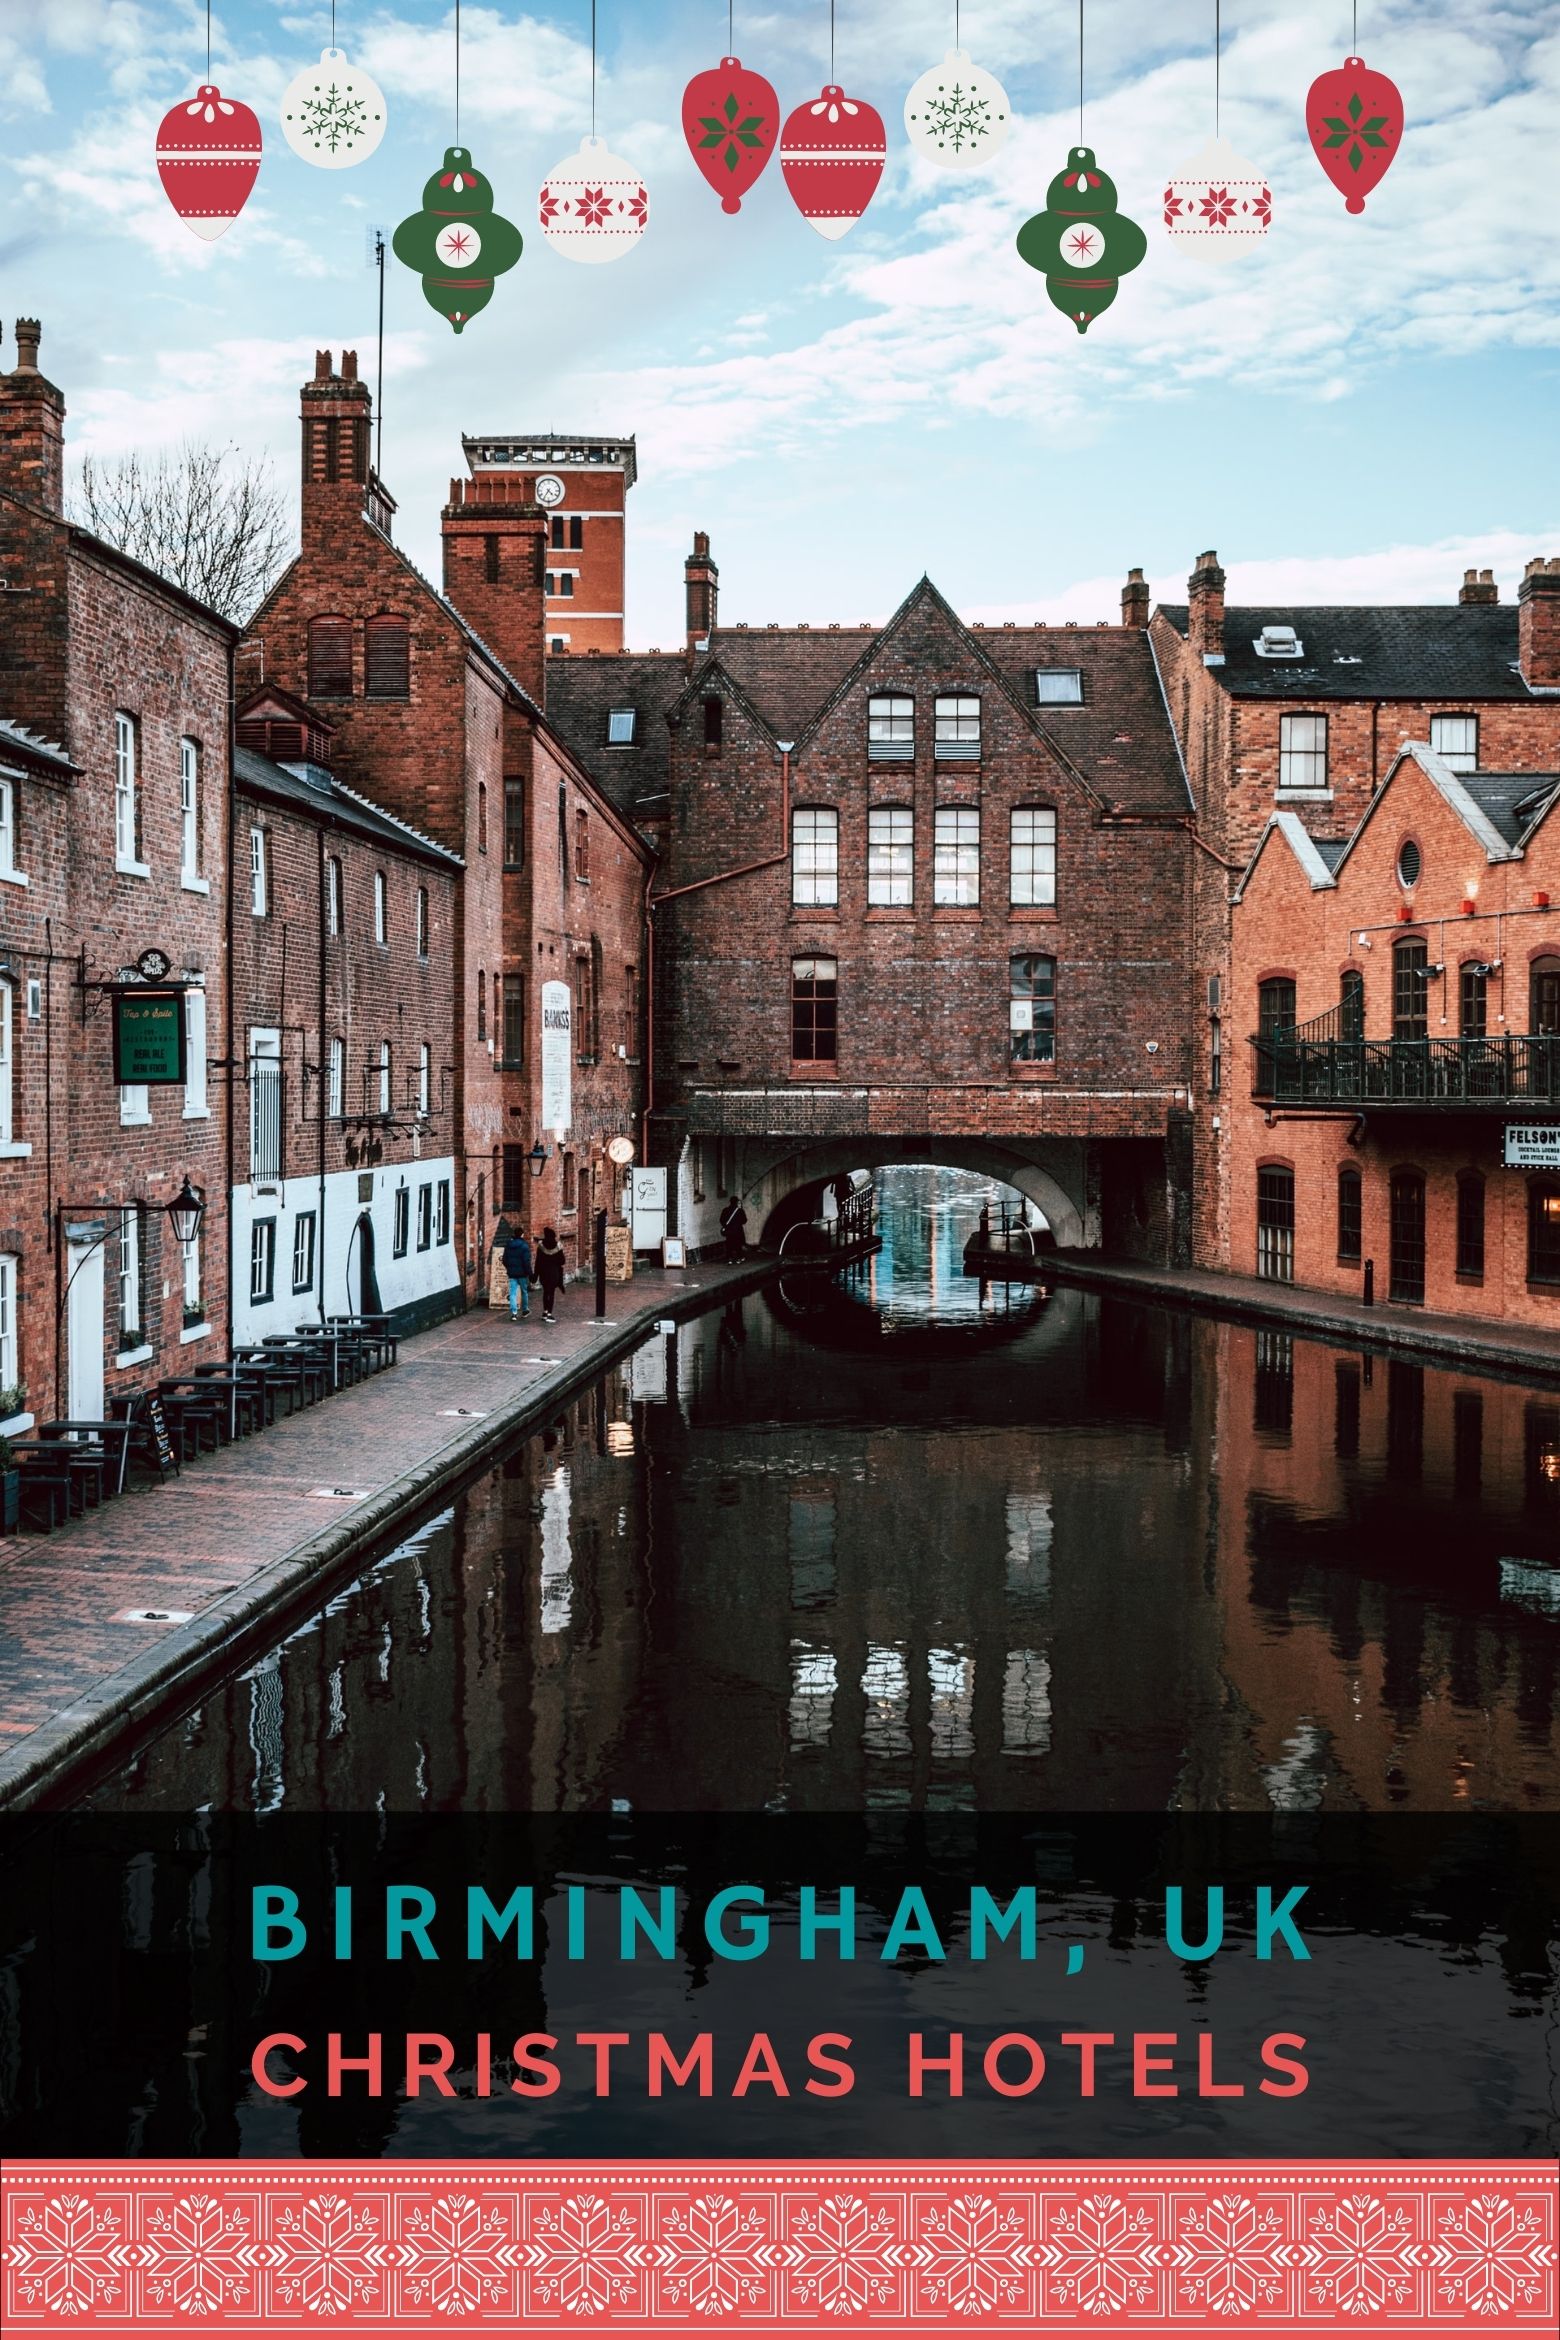 Birmingham canals in the UK